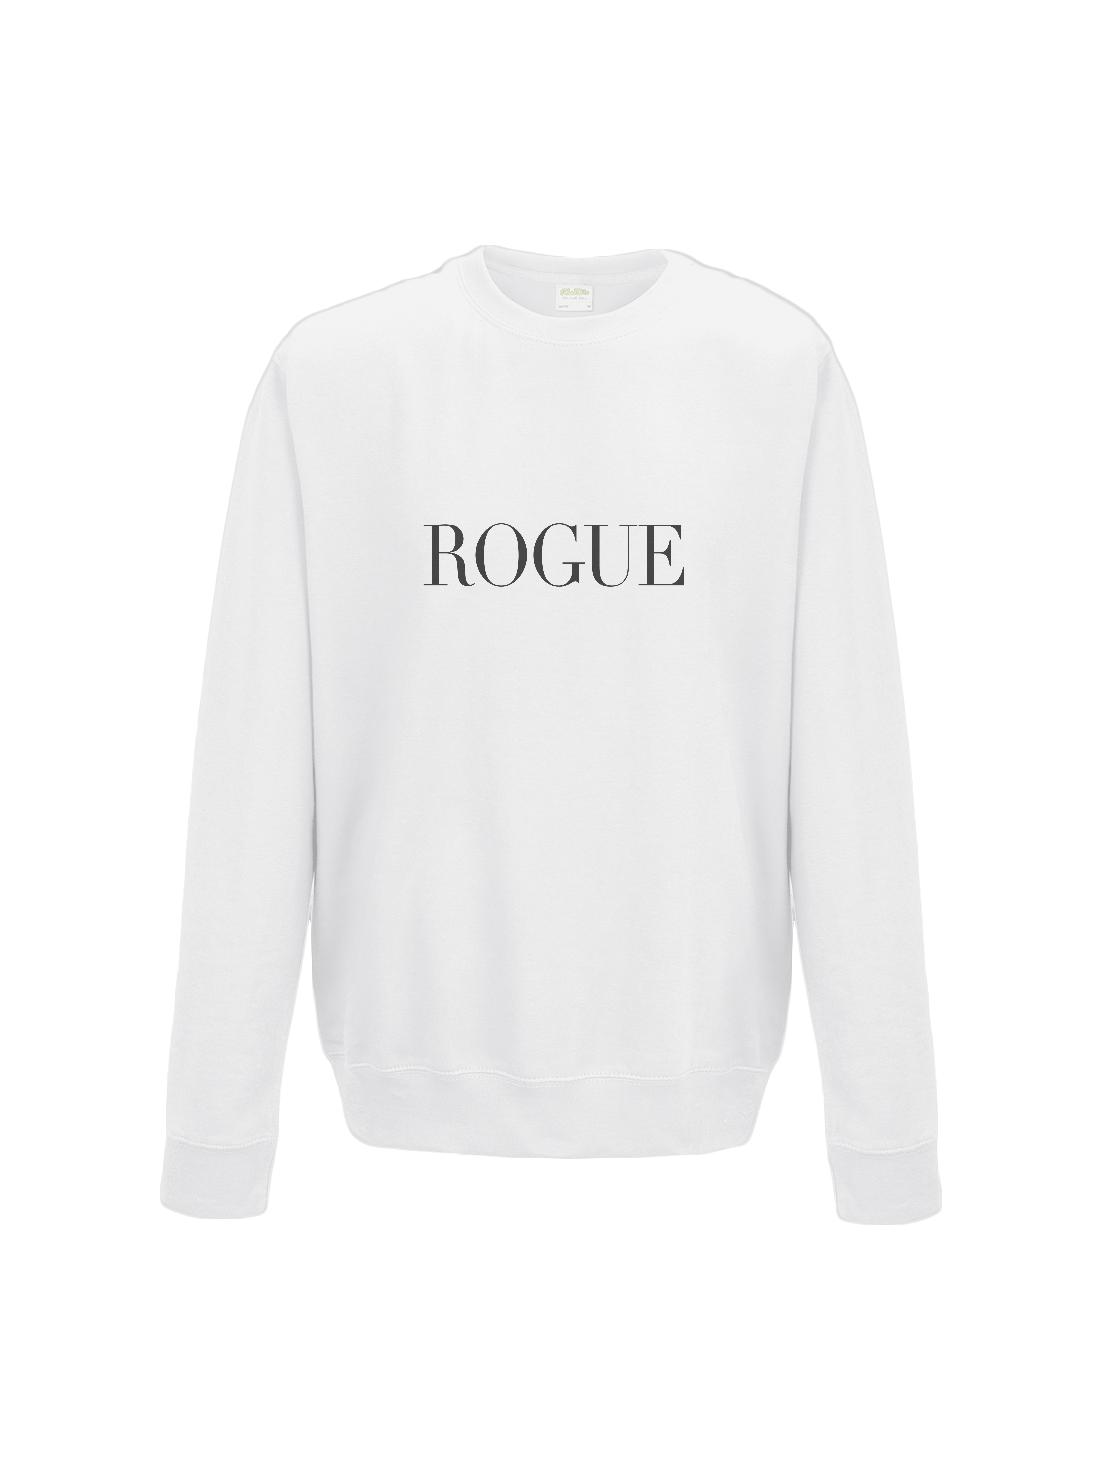 ROGUE sweatshirt in white